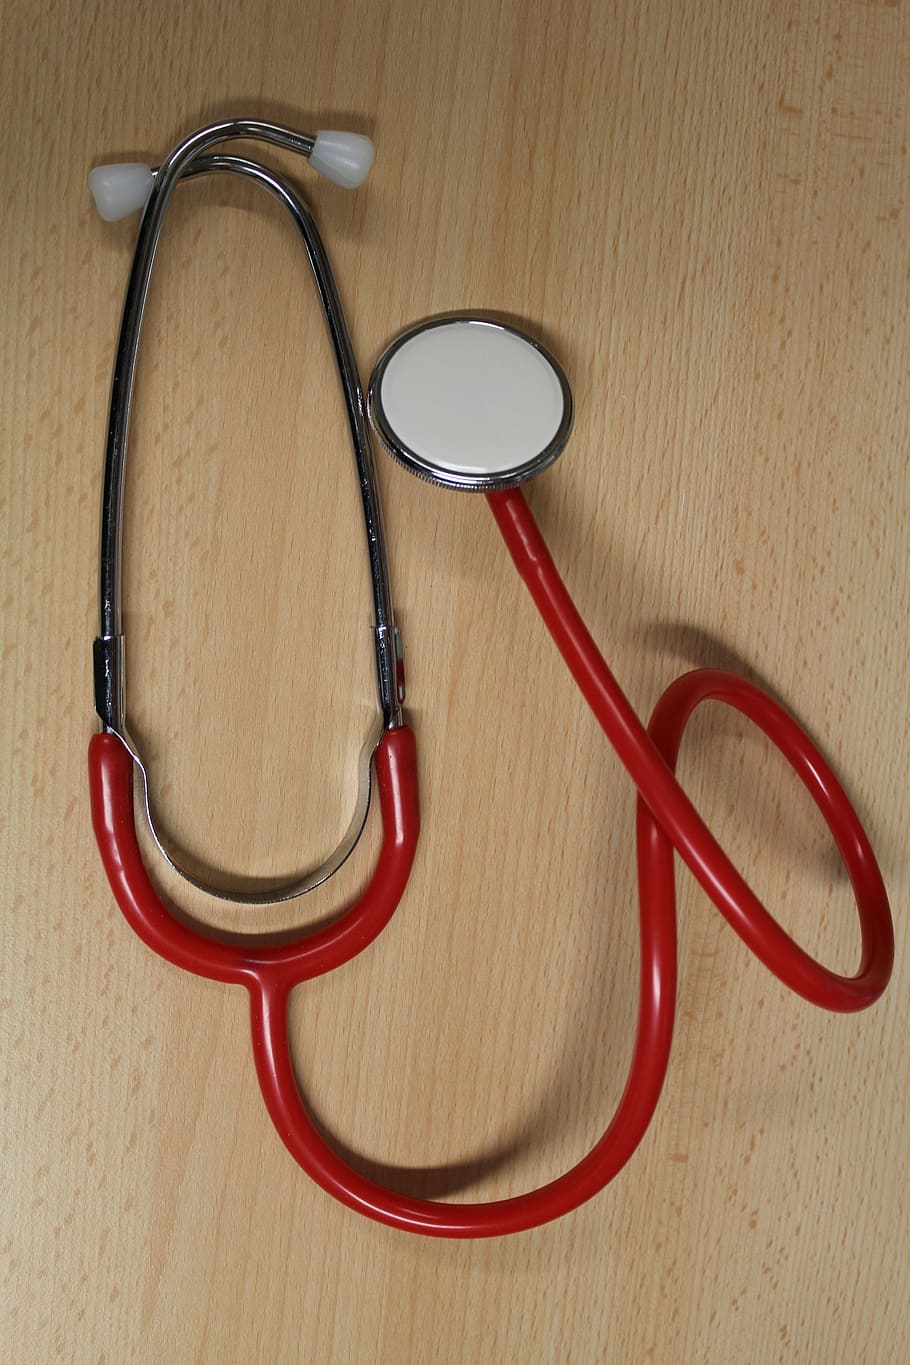 red, gray, sphygmomanometer, beige, wooden, surface, stethoscope, blood pressure, heart, investigation